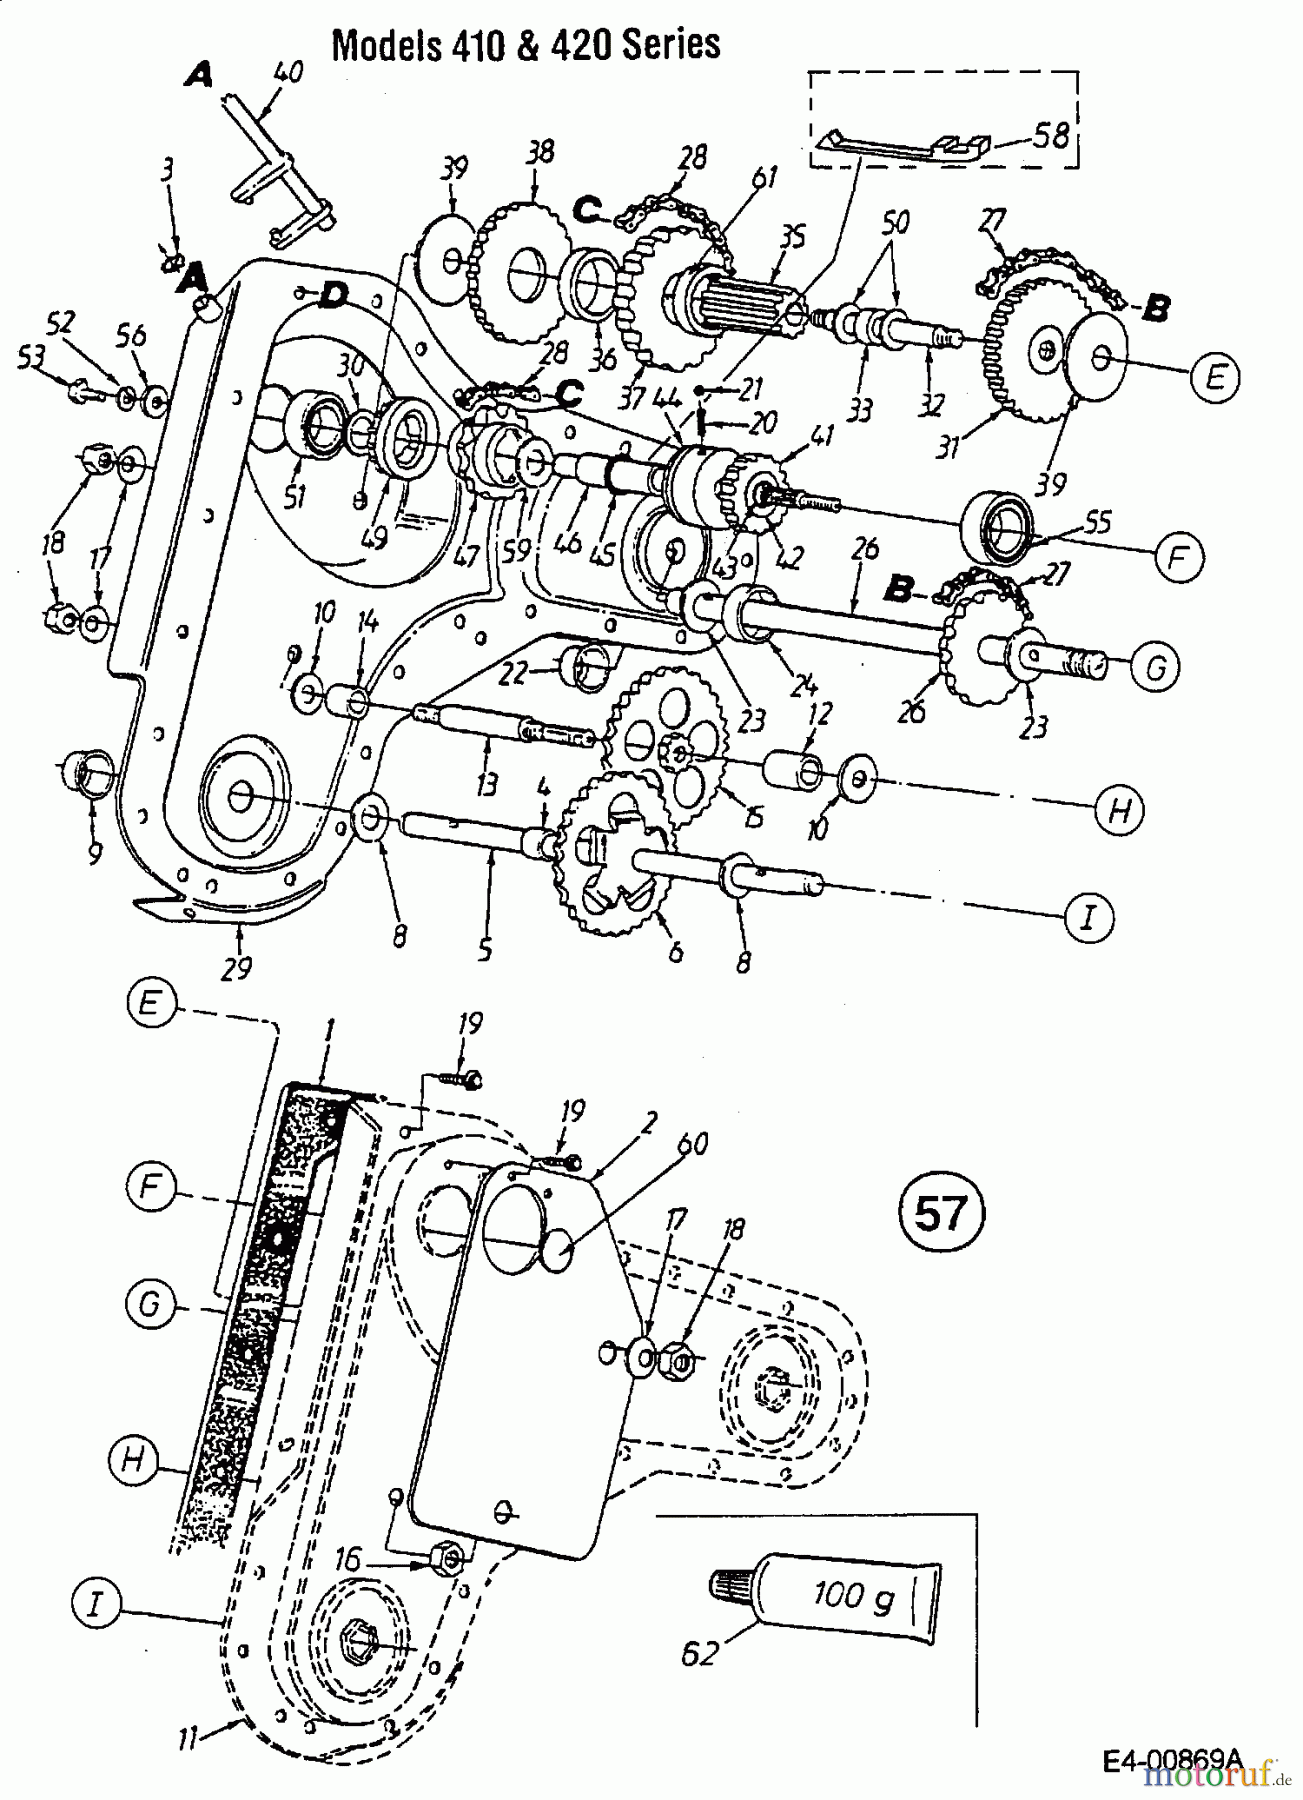  White Motorhacken RB 530 21A-410-679  (2000) Getriebe